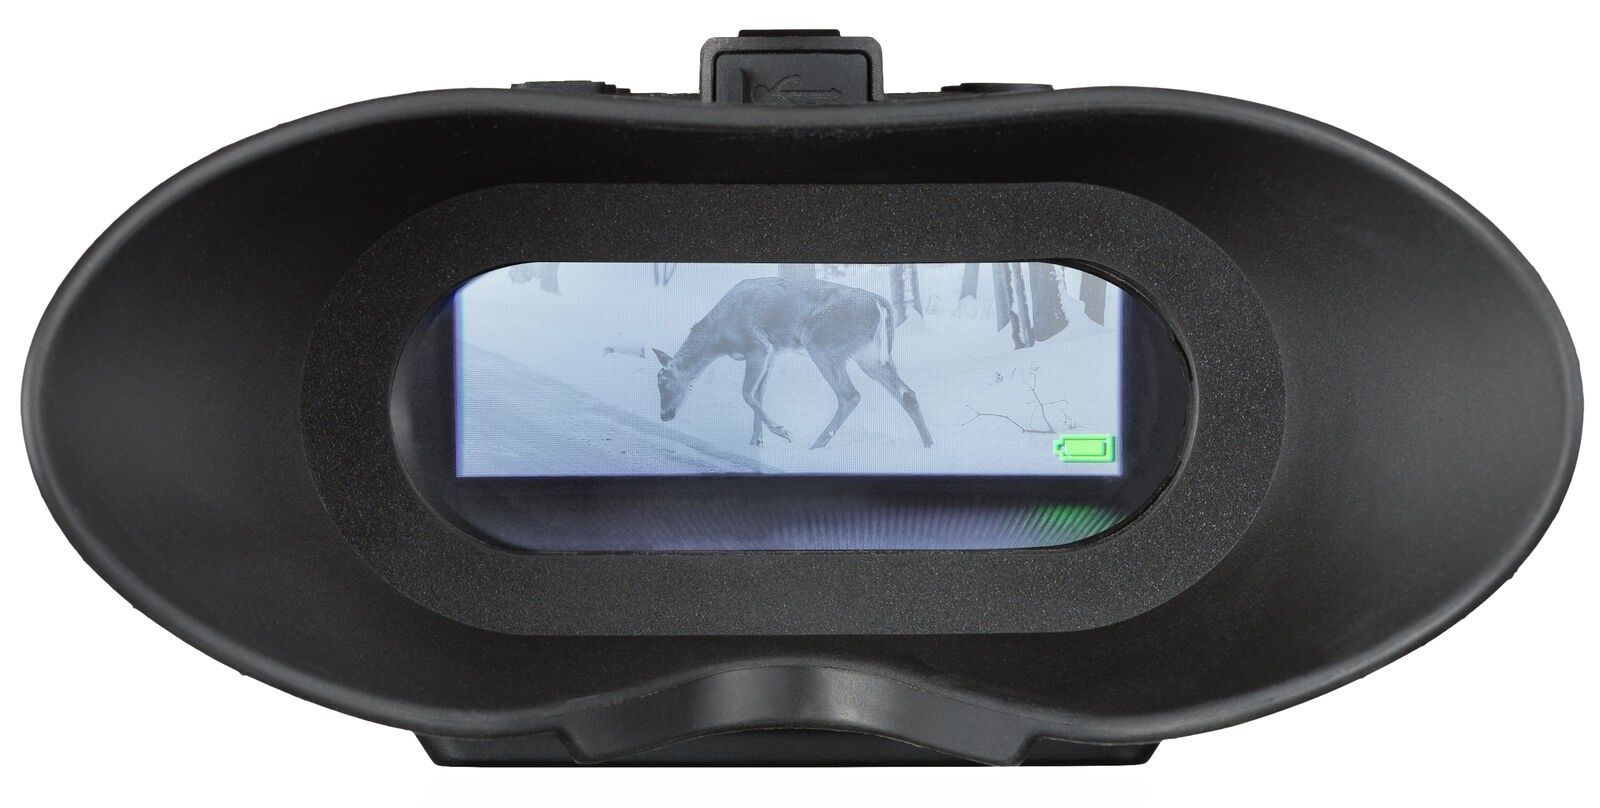 Bresser Digital Night Vision Binocular 3x with recording